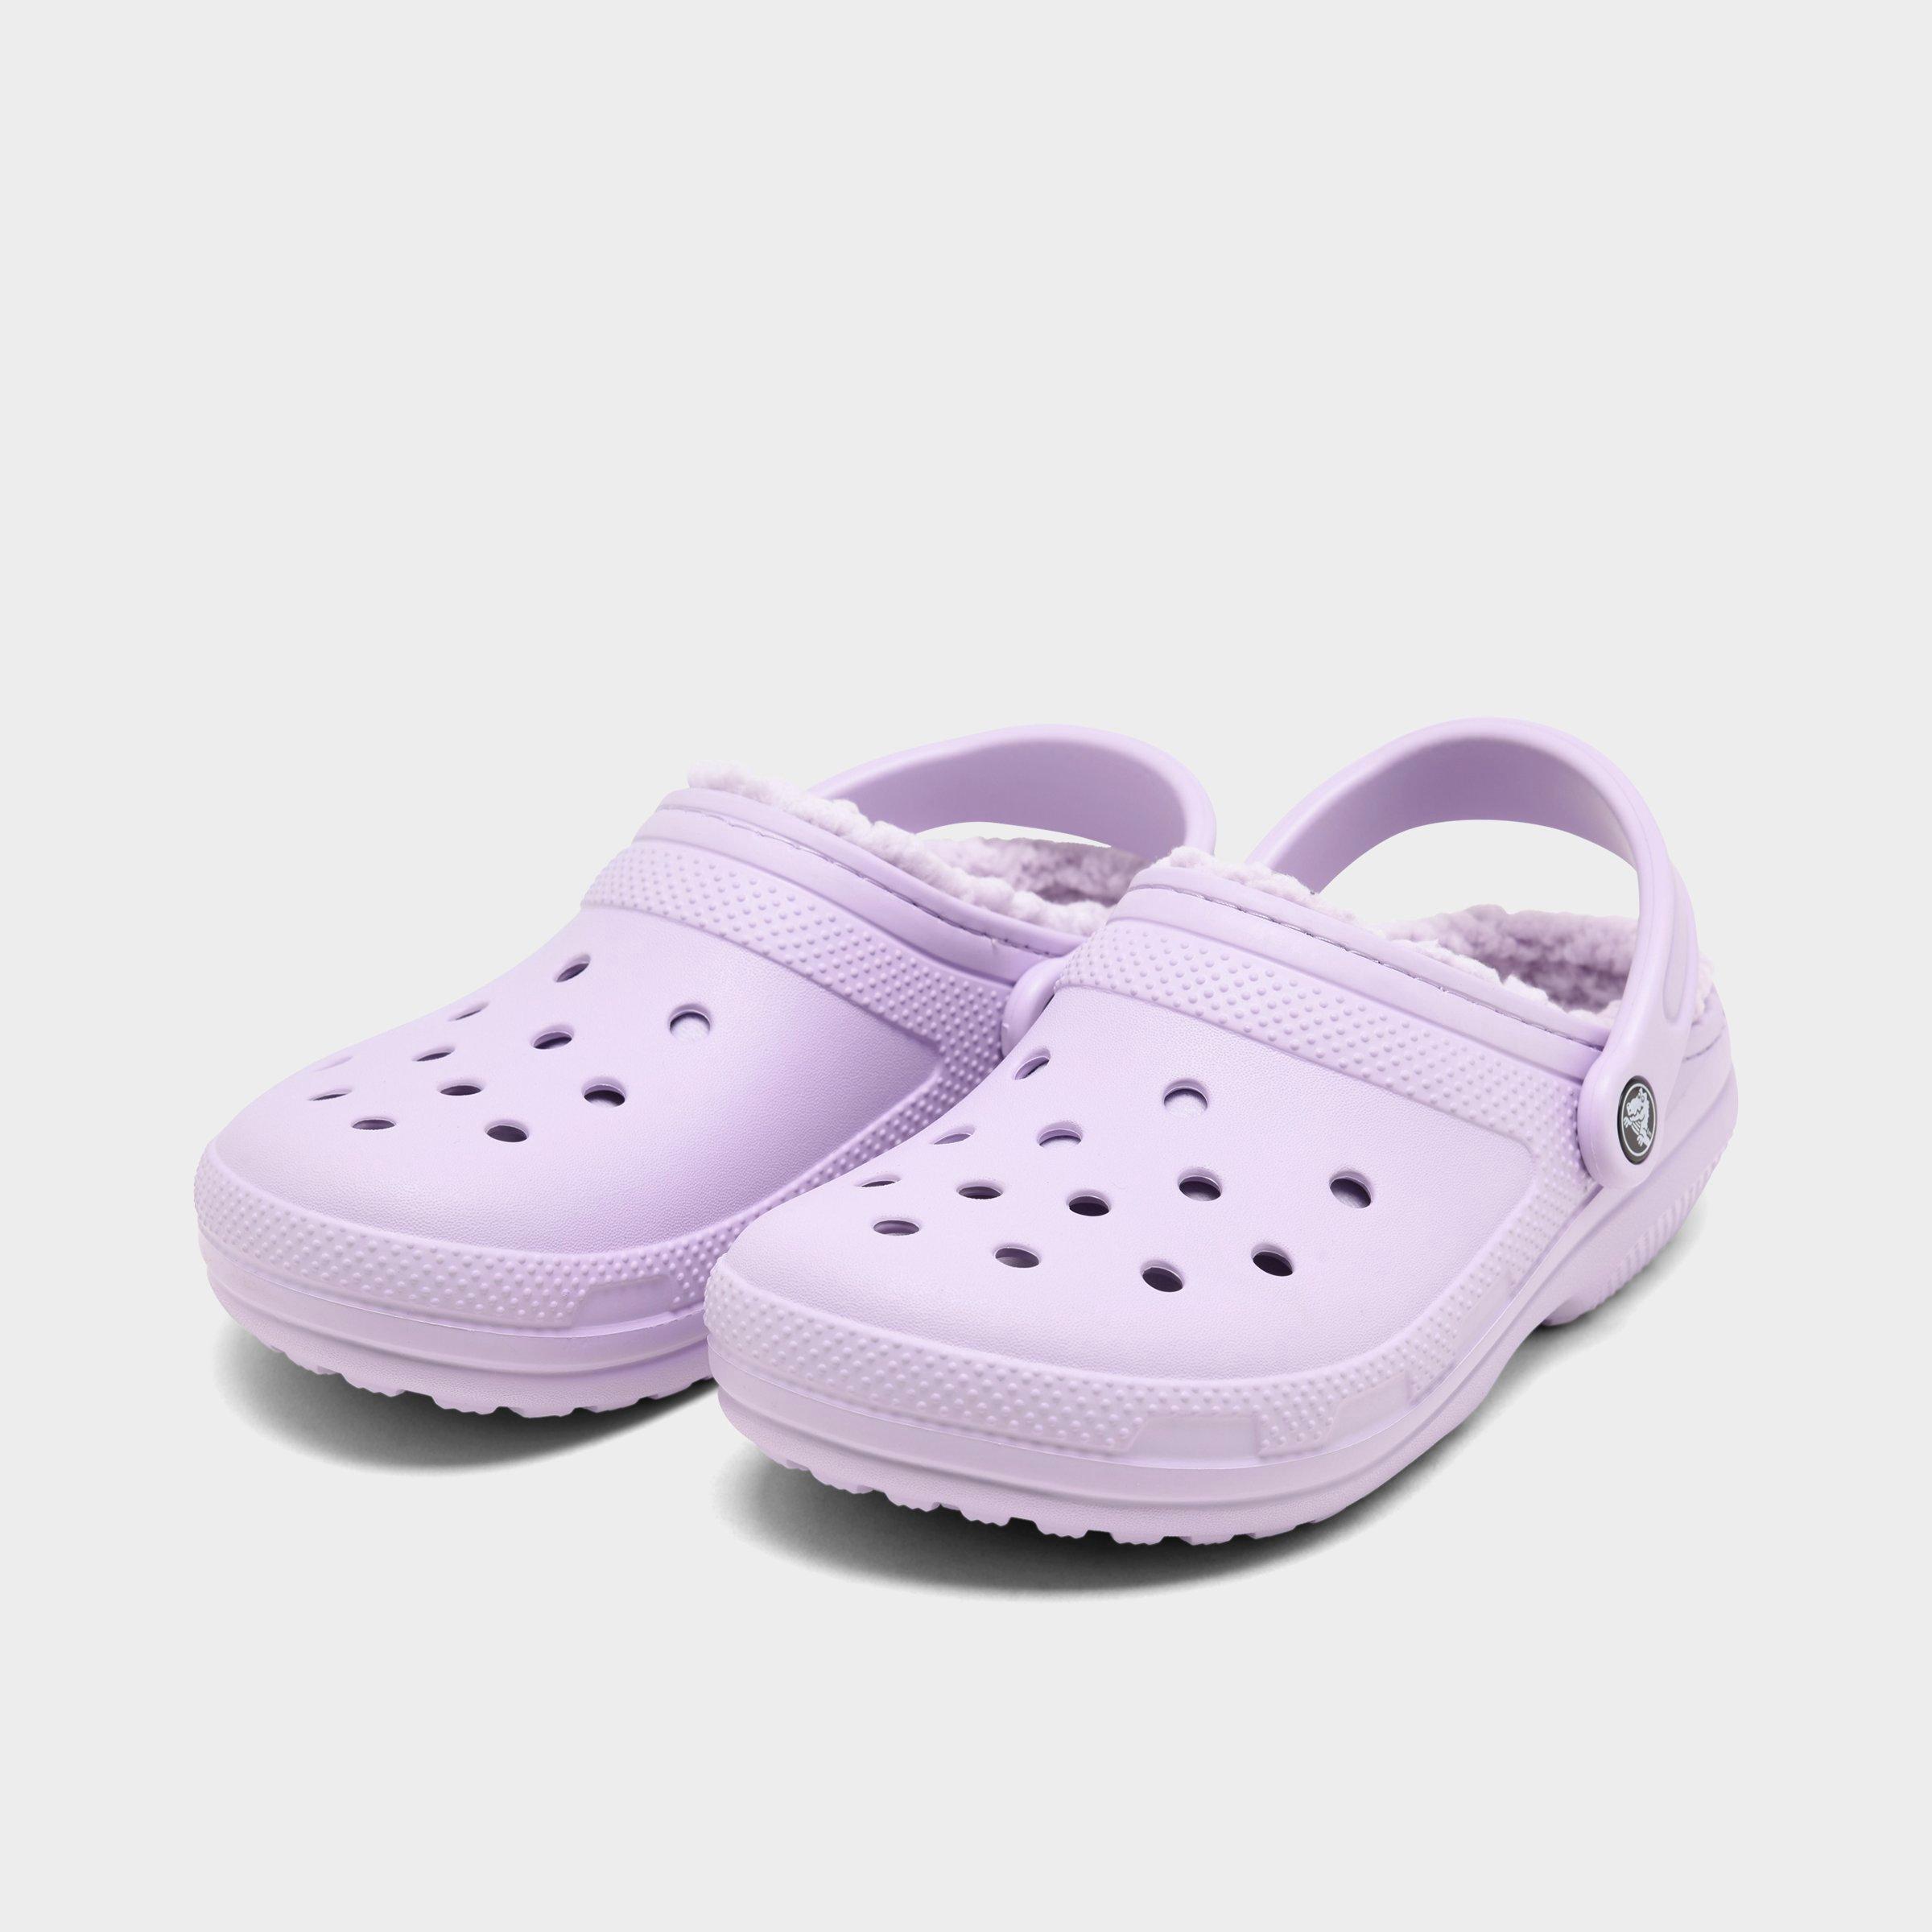 Crocs Classic Lined Clog Shoes| Finish Line